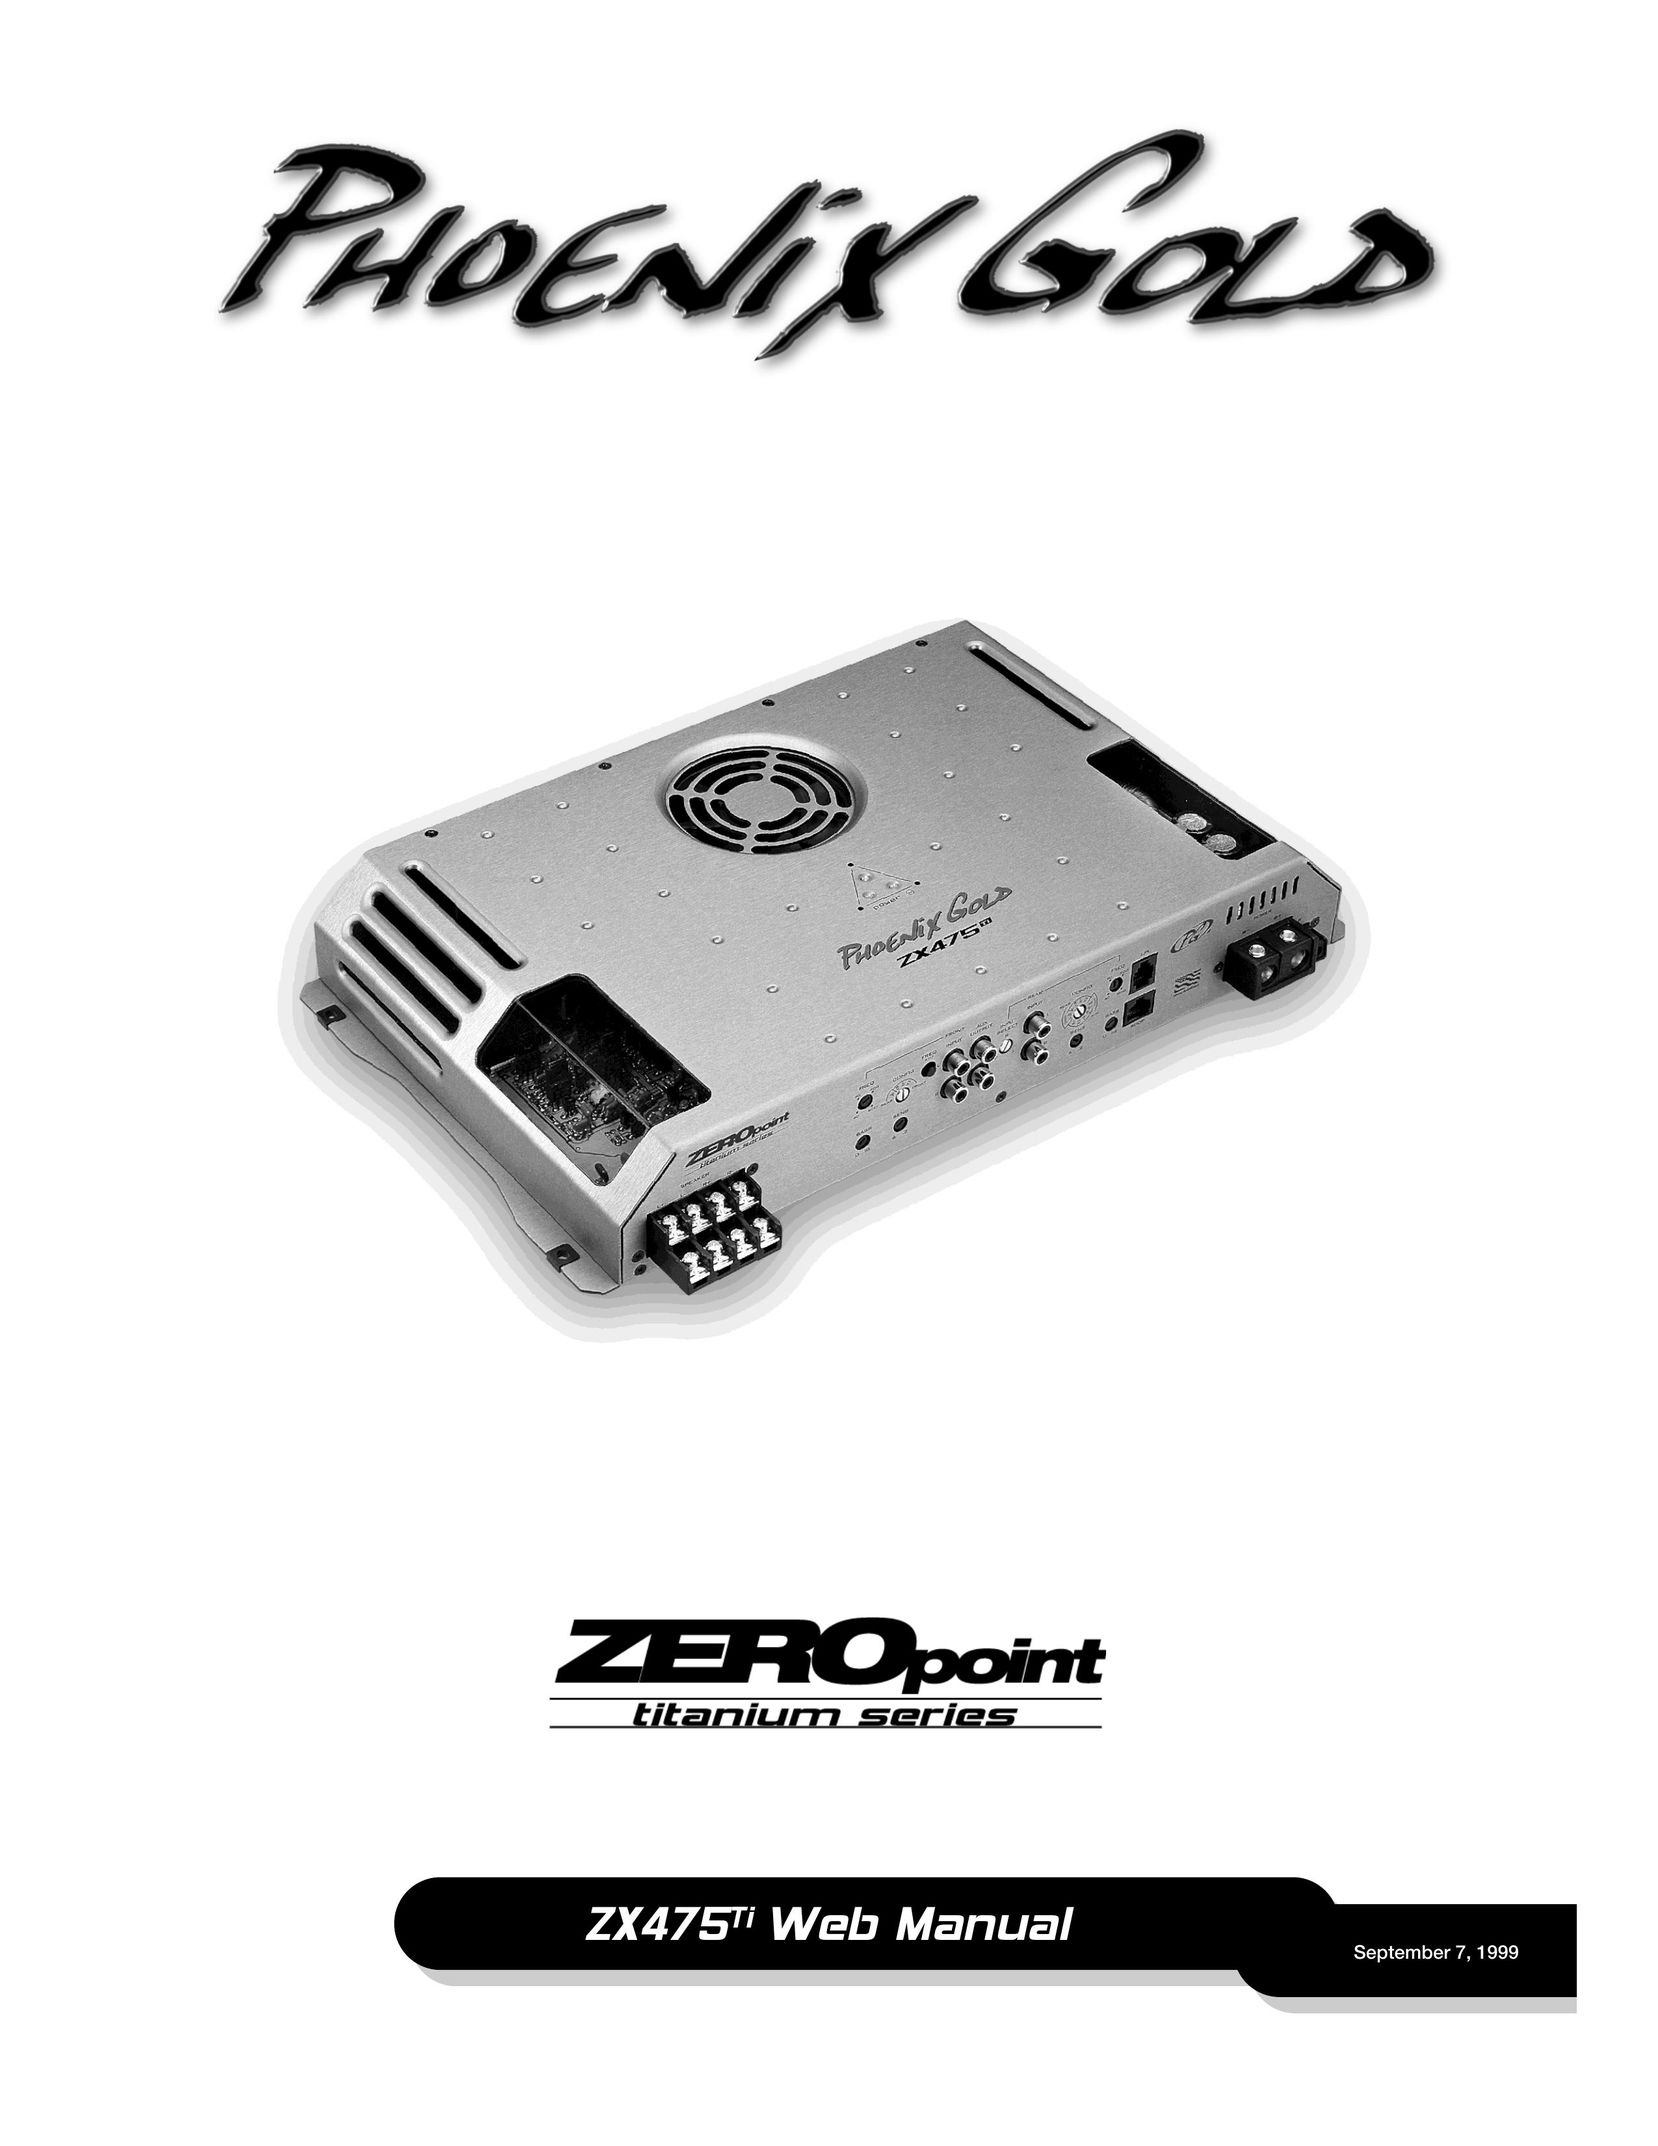 Phoenix Gold ZX475Ti Stereo Amplifier User Manual